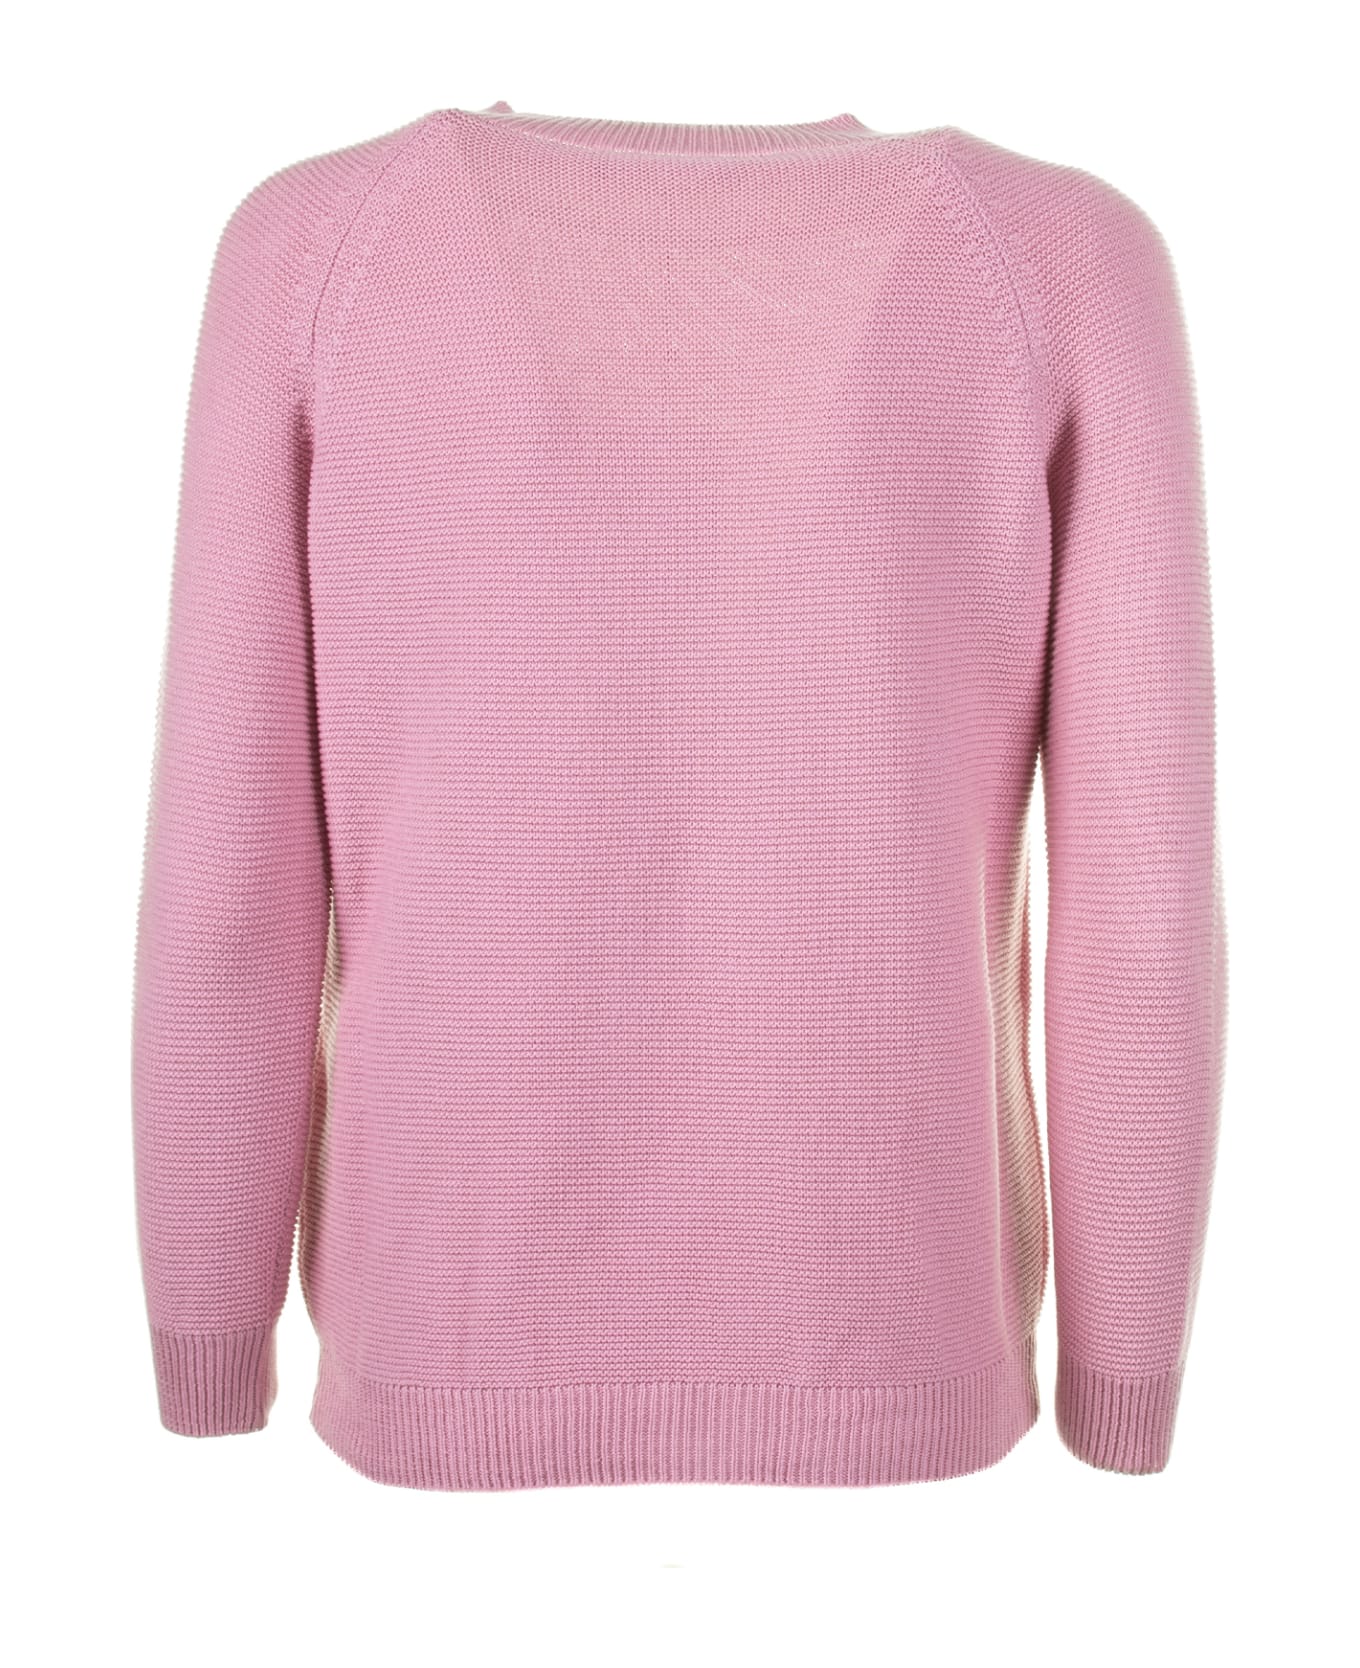 Weekend Max Mara Soft Pink Cotton Sweater - PETALO